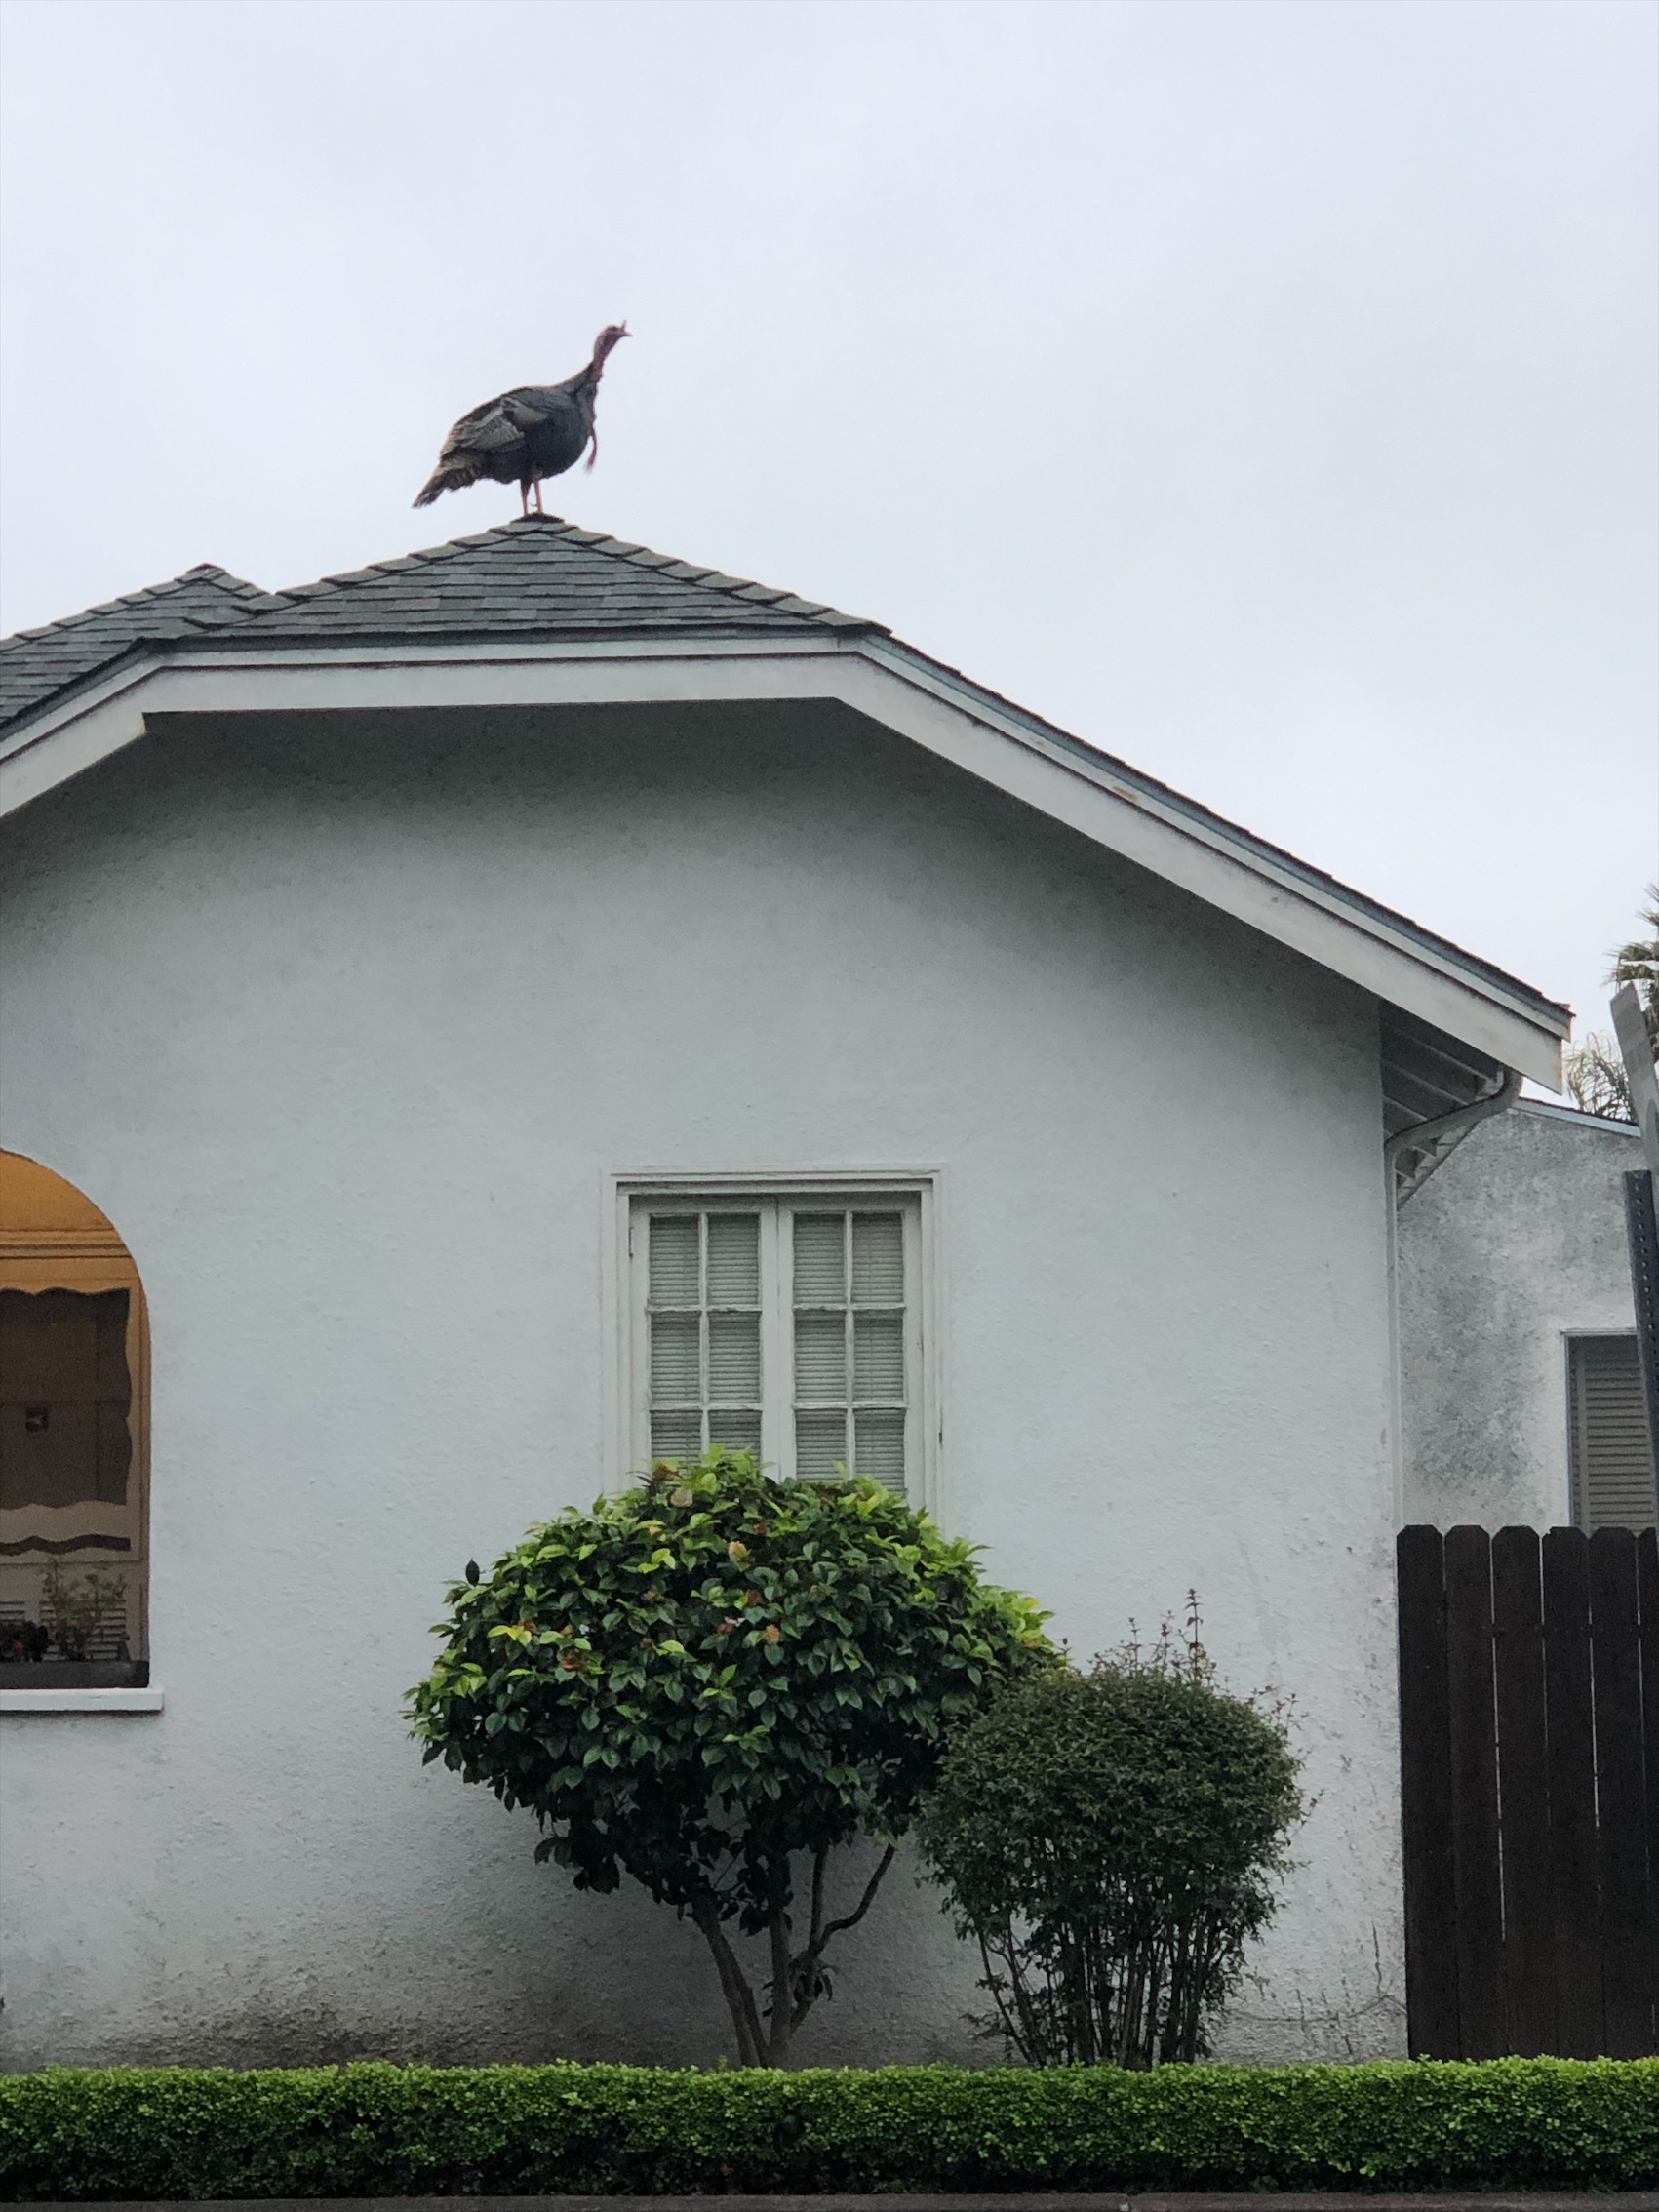 turkey on neighbor's house